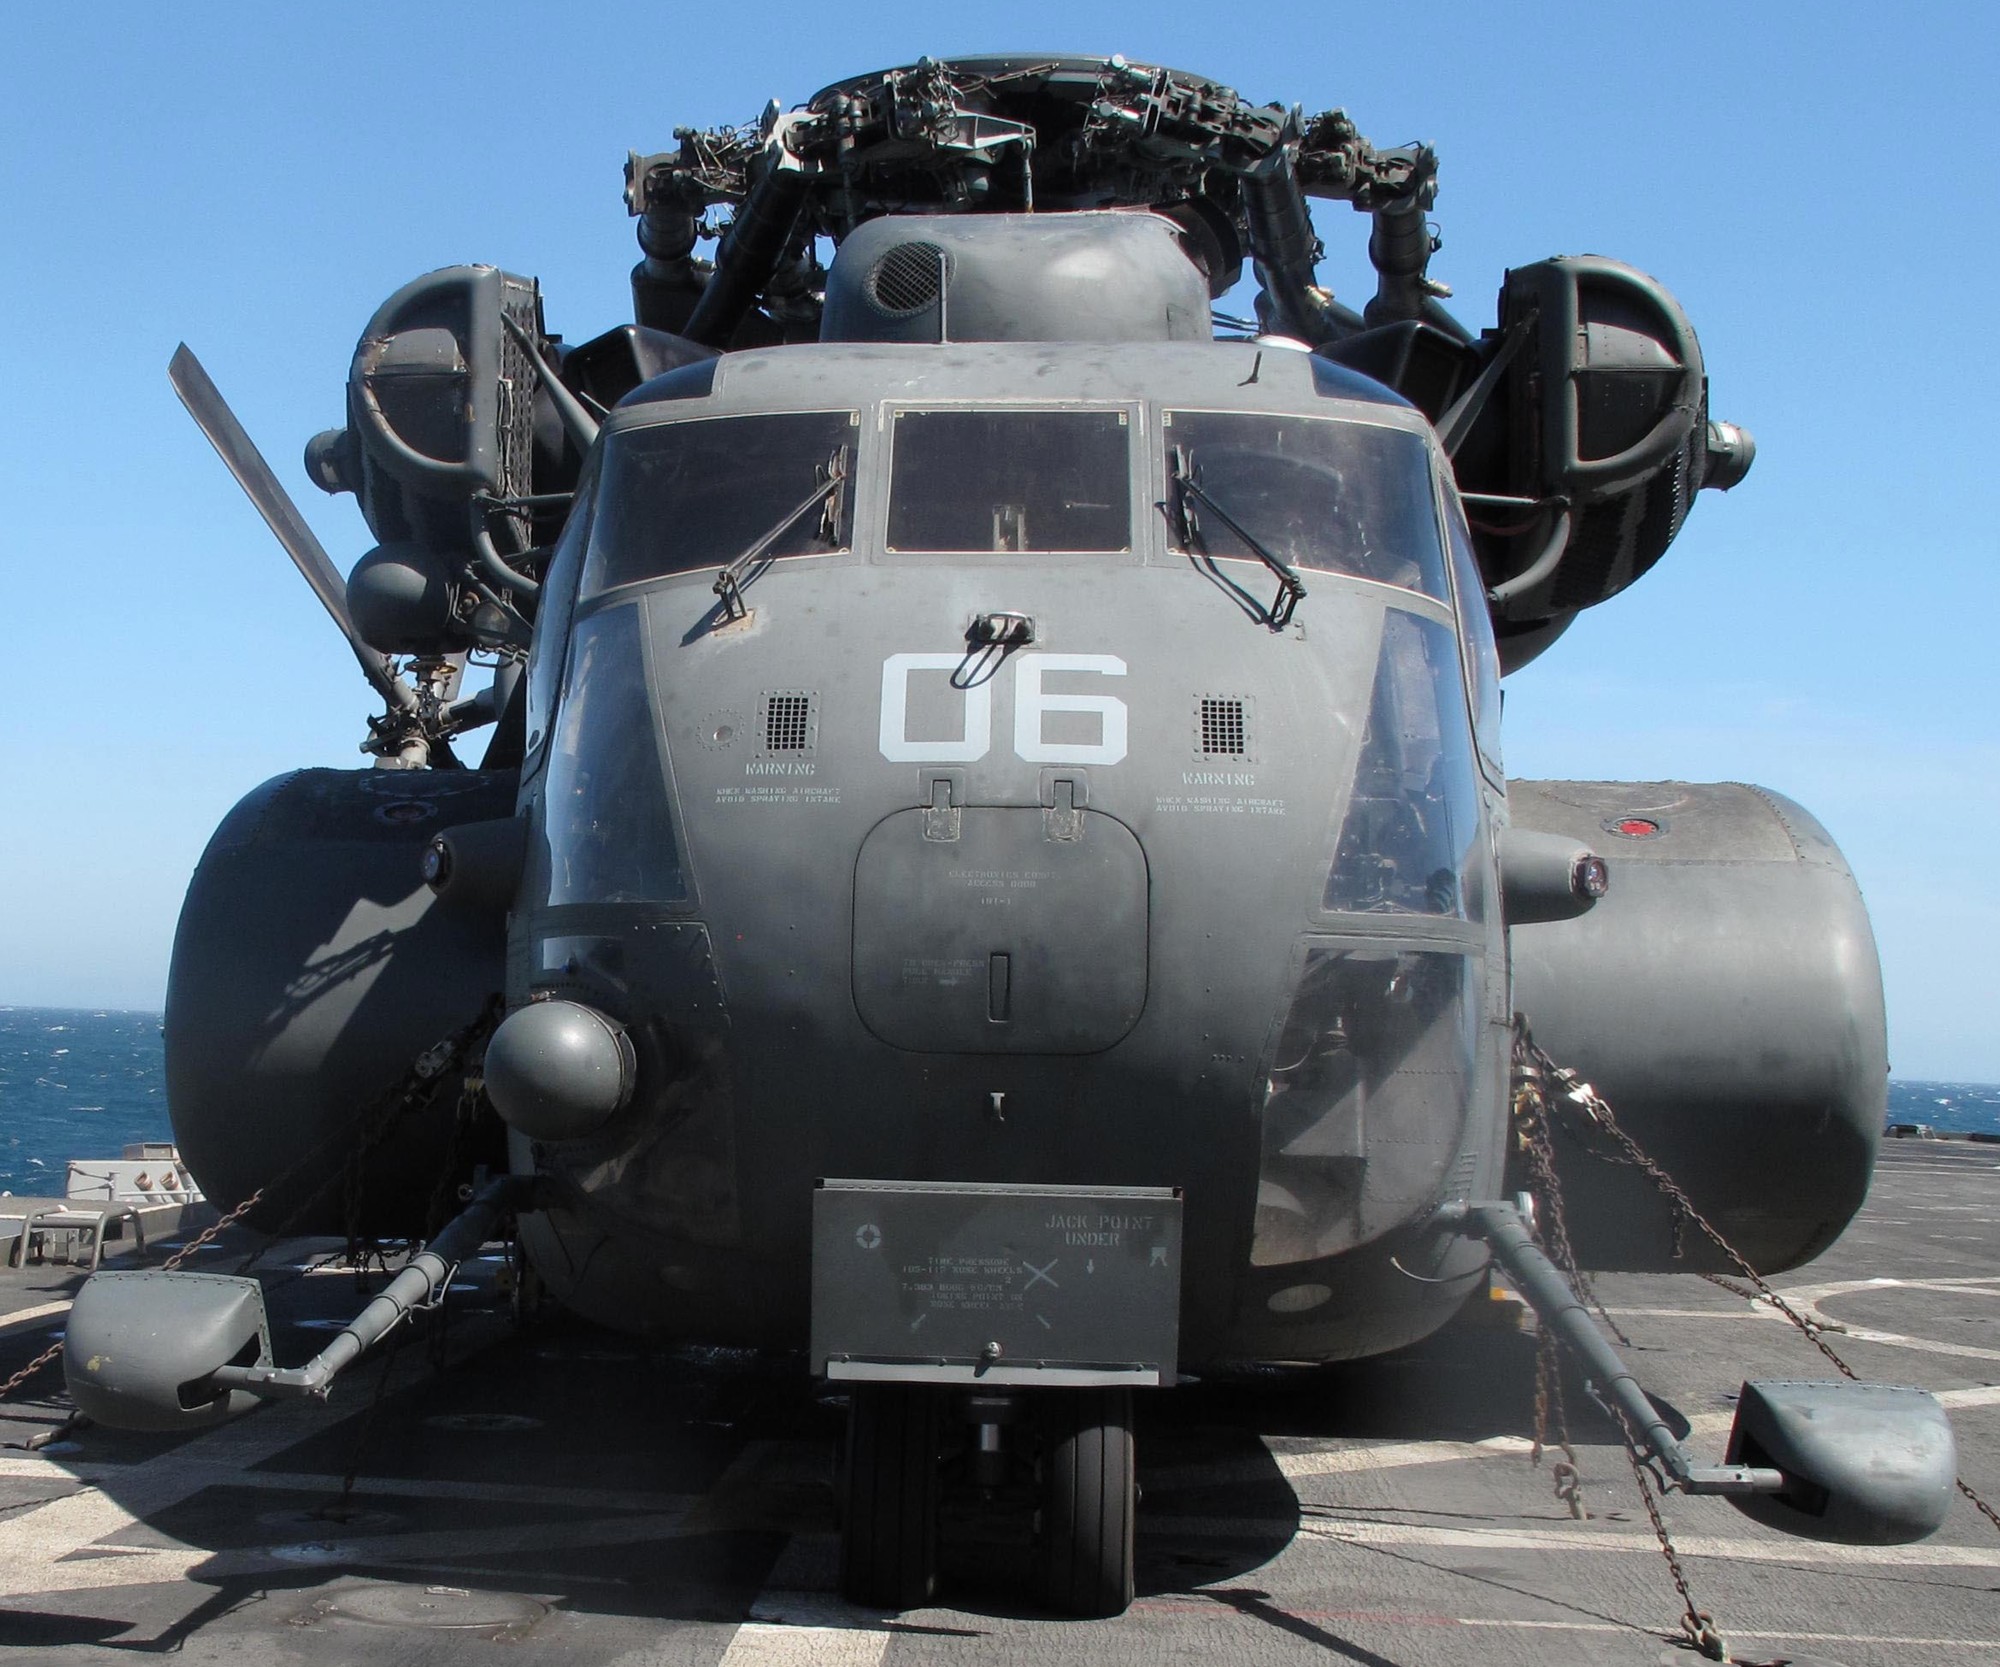 hm-15 blackhawks helicopter mine countermeasures squadron navy mh-53e sea dragon 118